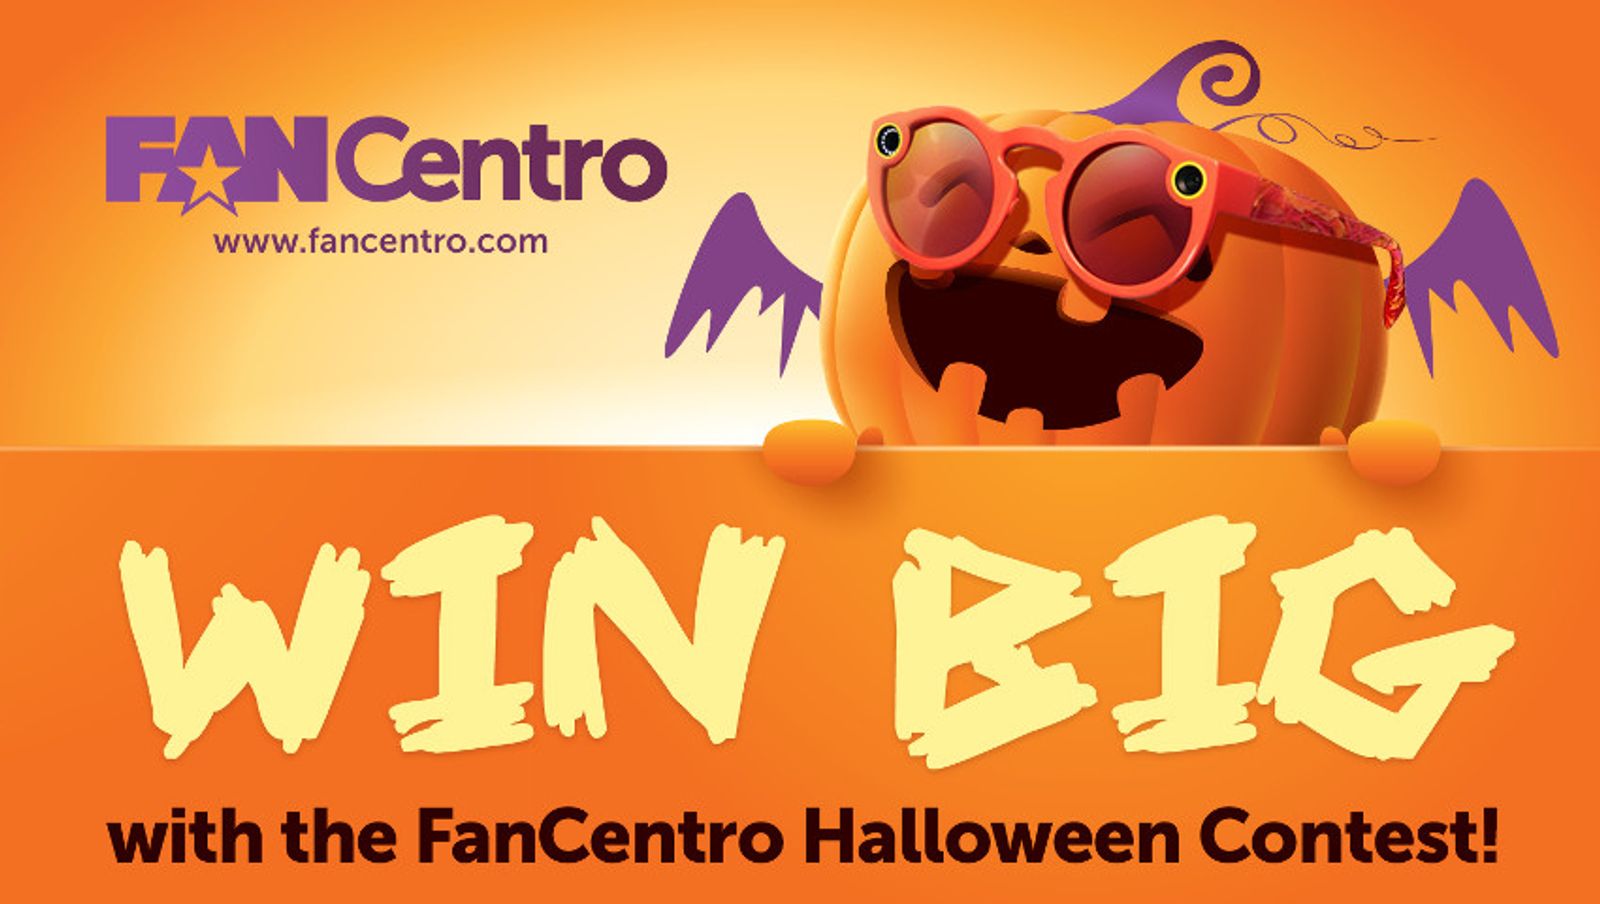 FanCentro.com Launches Halloween Contest